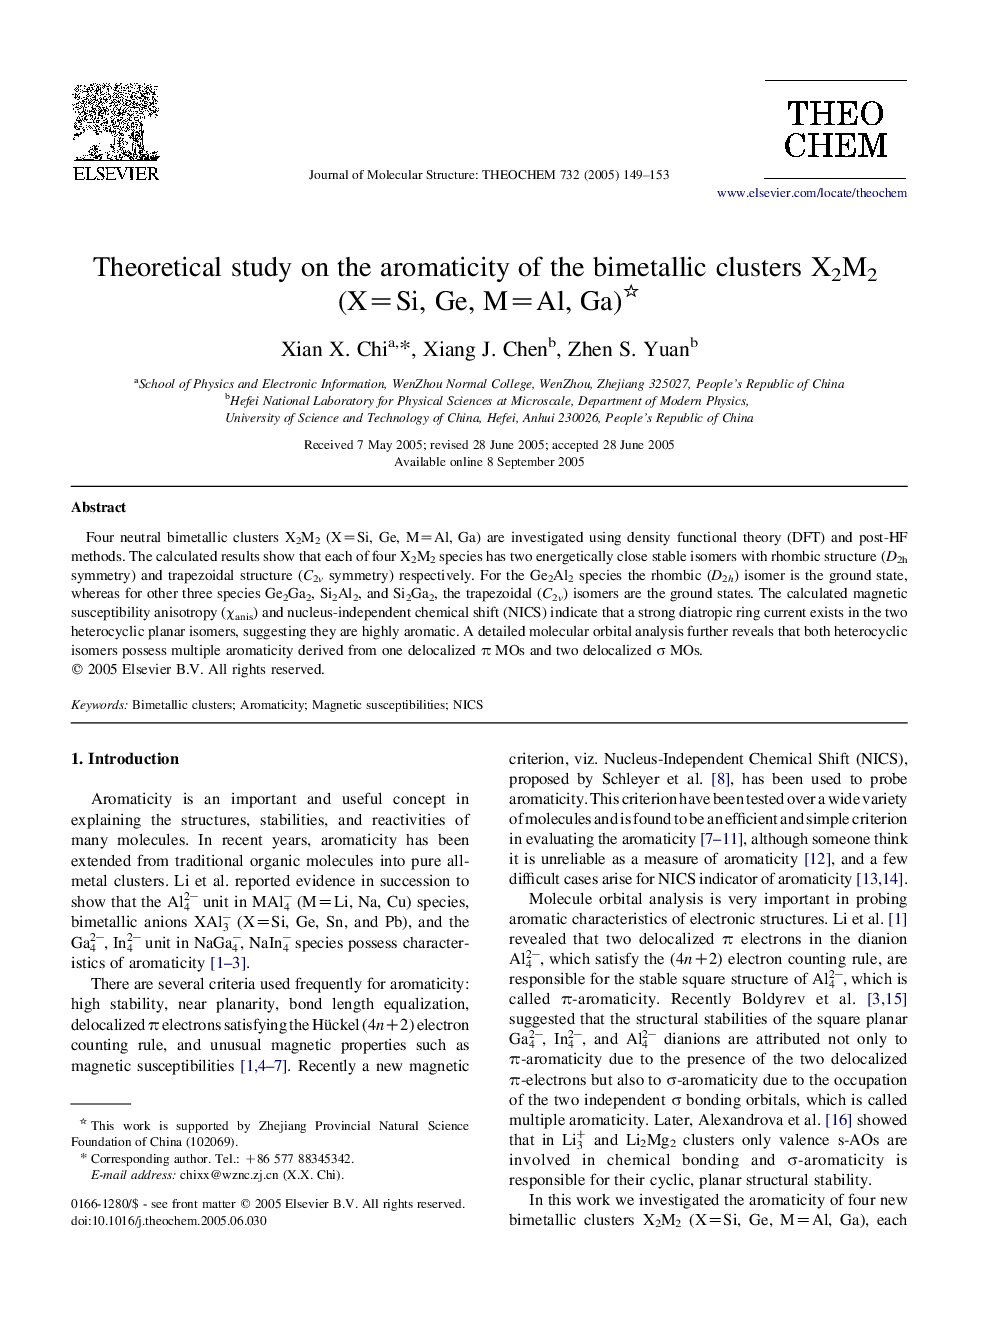 Theoretical study on the aromaticity of the bimetallic clusters X2M2 (X=Si, Ge, M=Al, Ga)